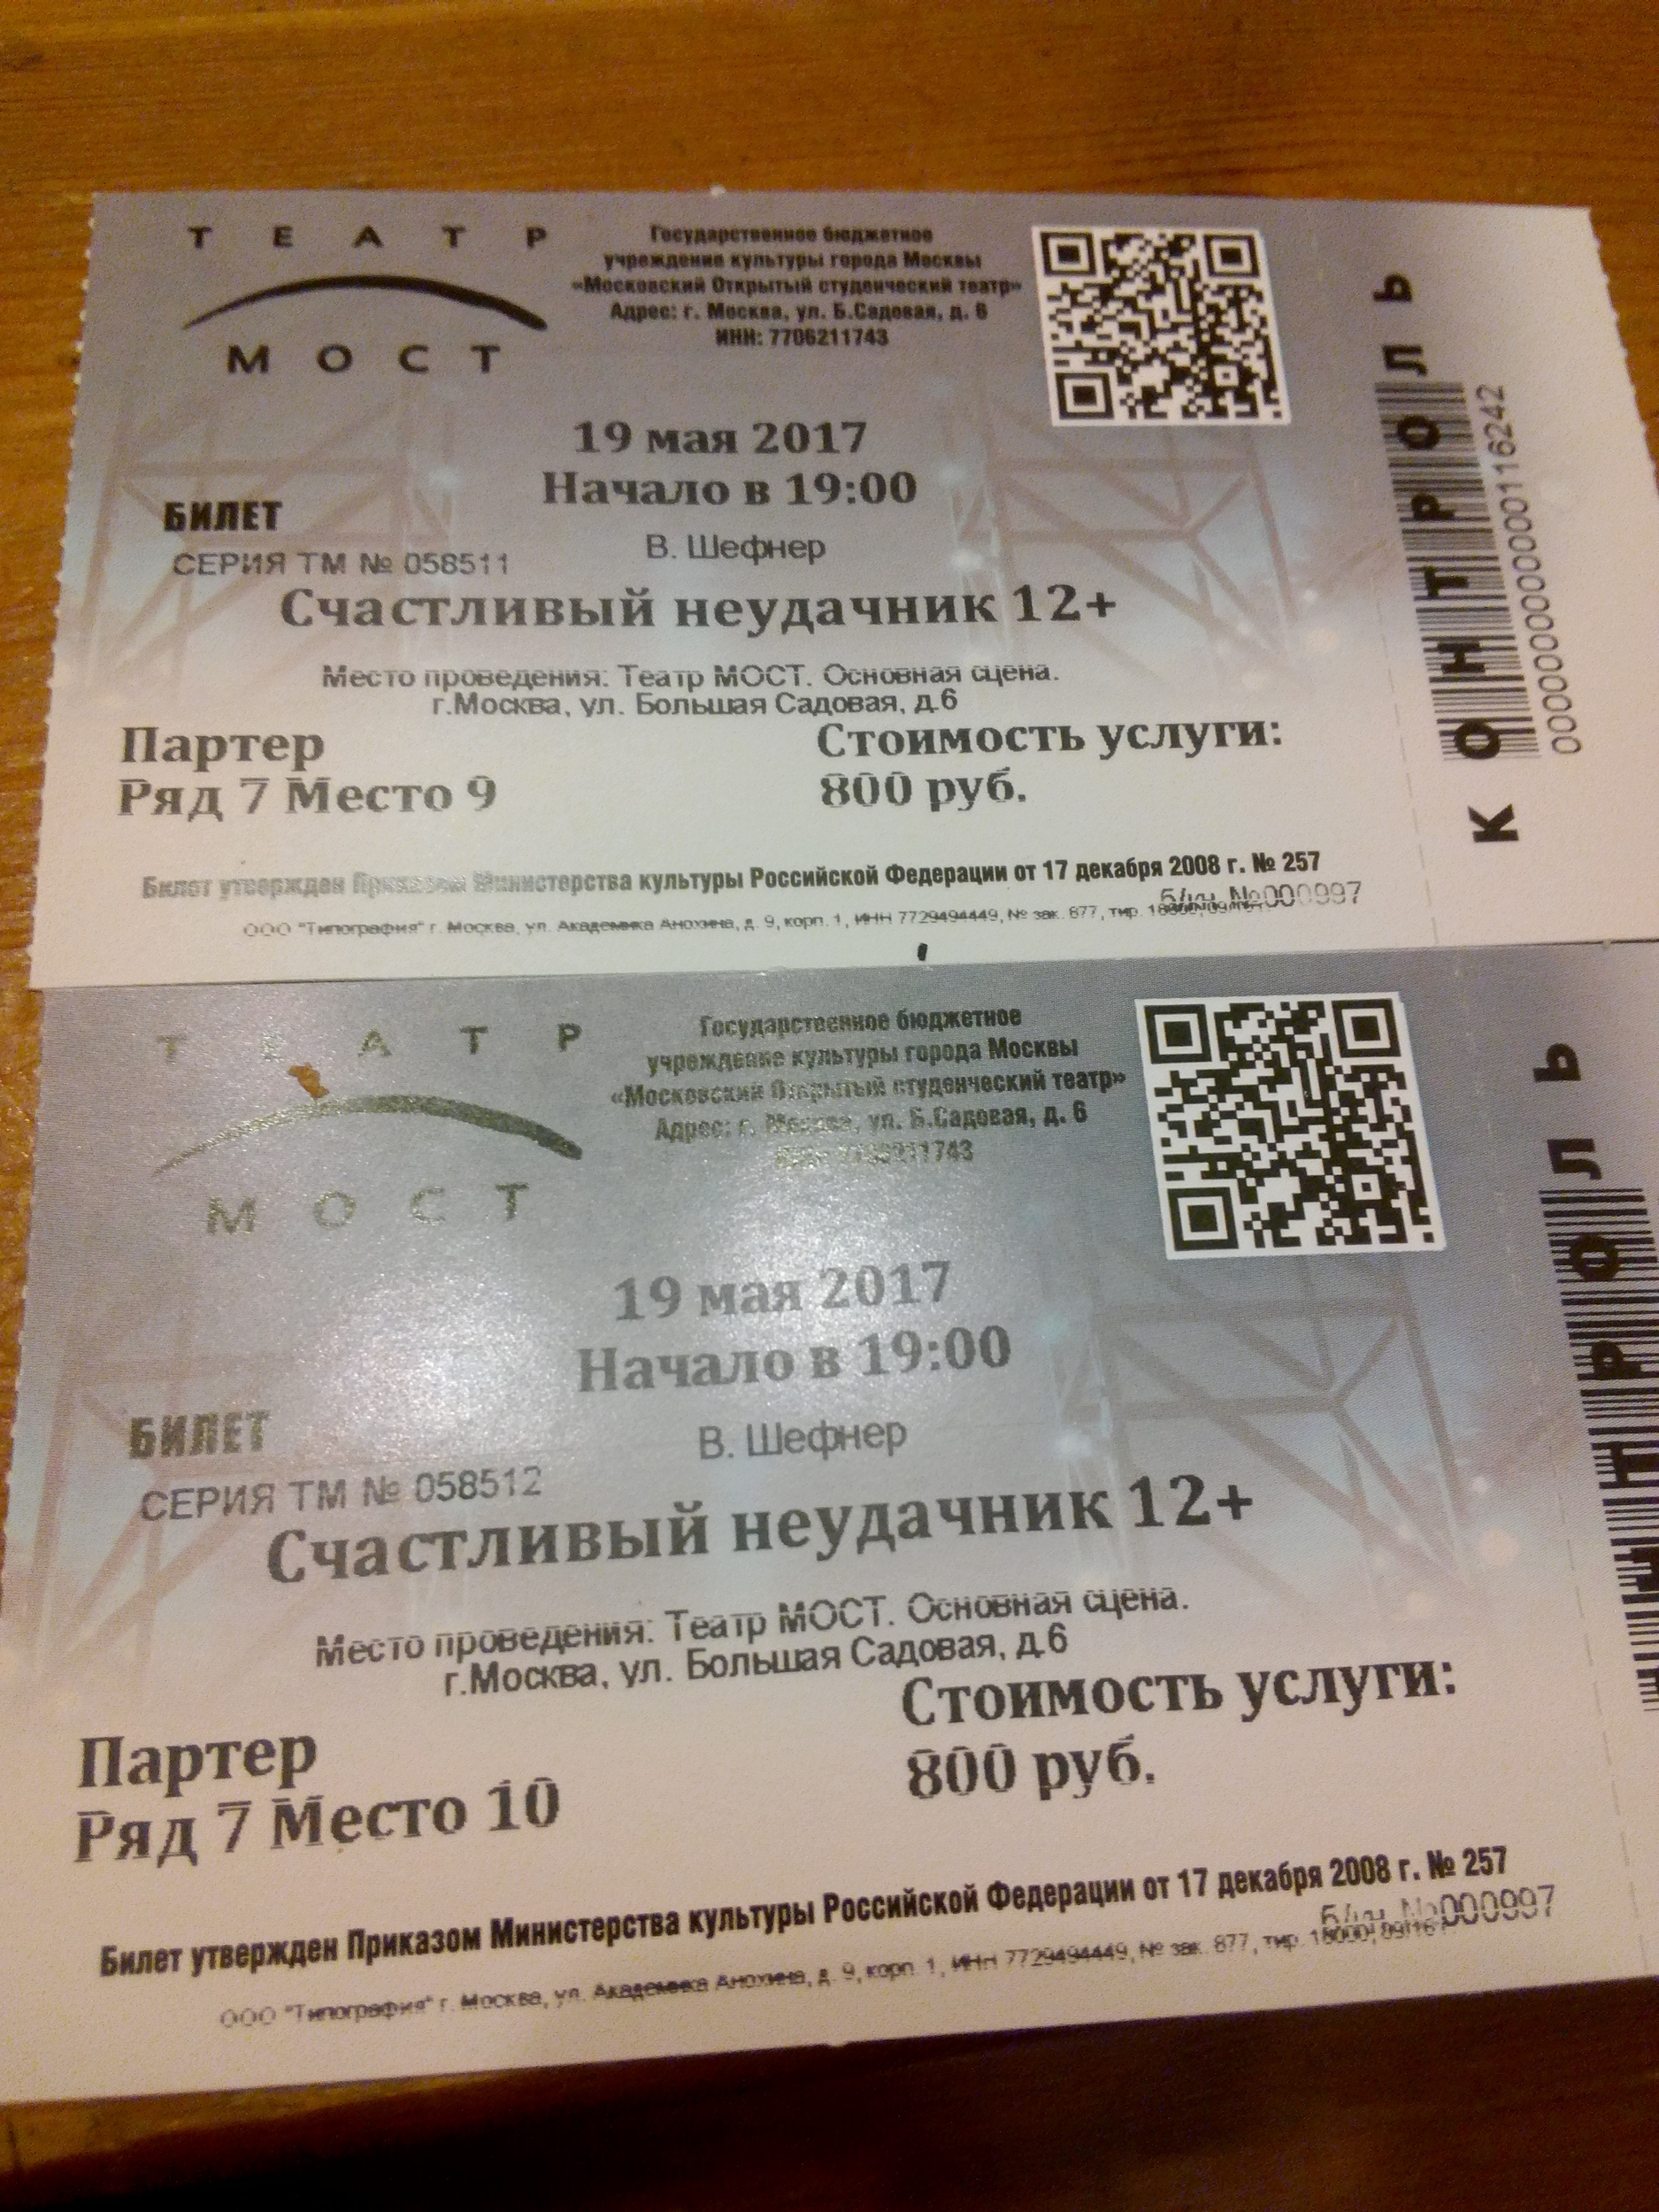 Большой театр билеты на спектакли. Билет в театр. Билет на спектакль. Билет в Московский театр. Билет в театр на спектакль.